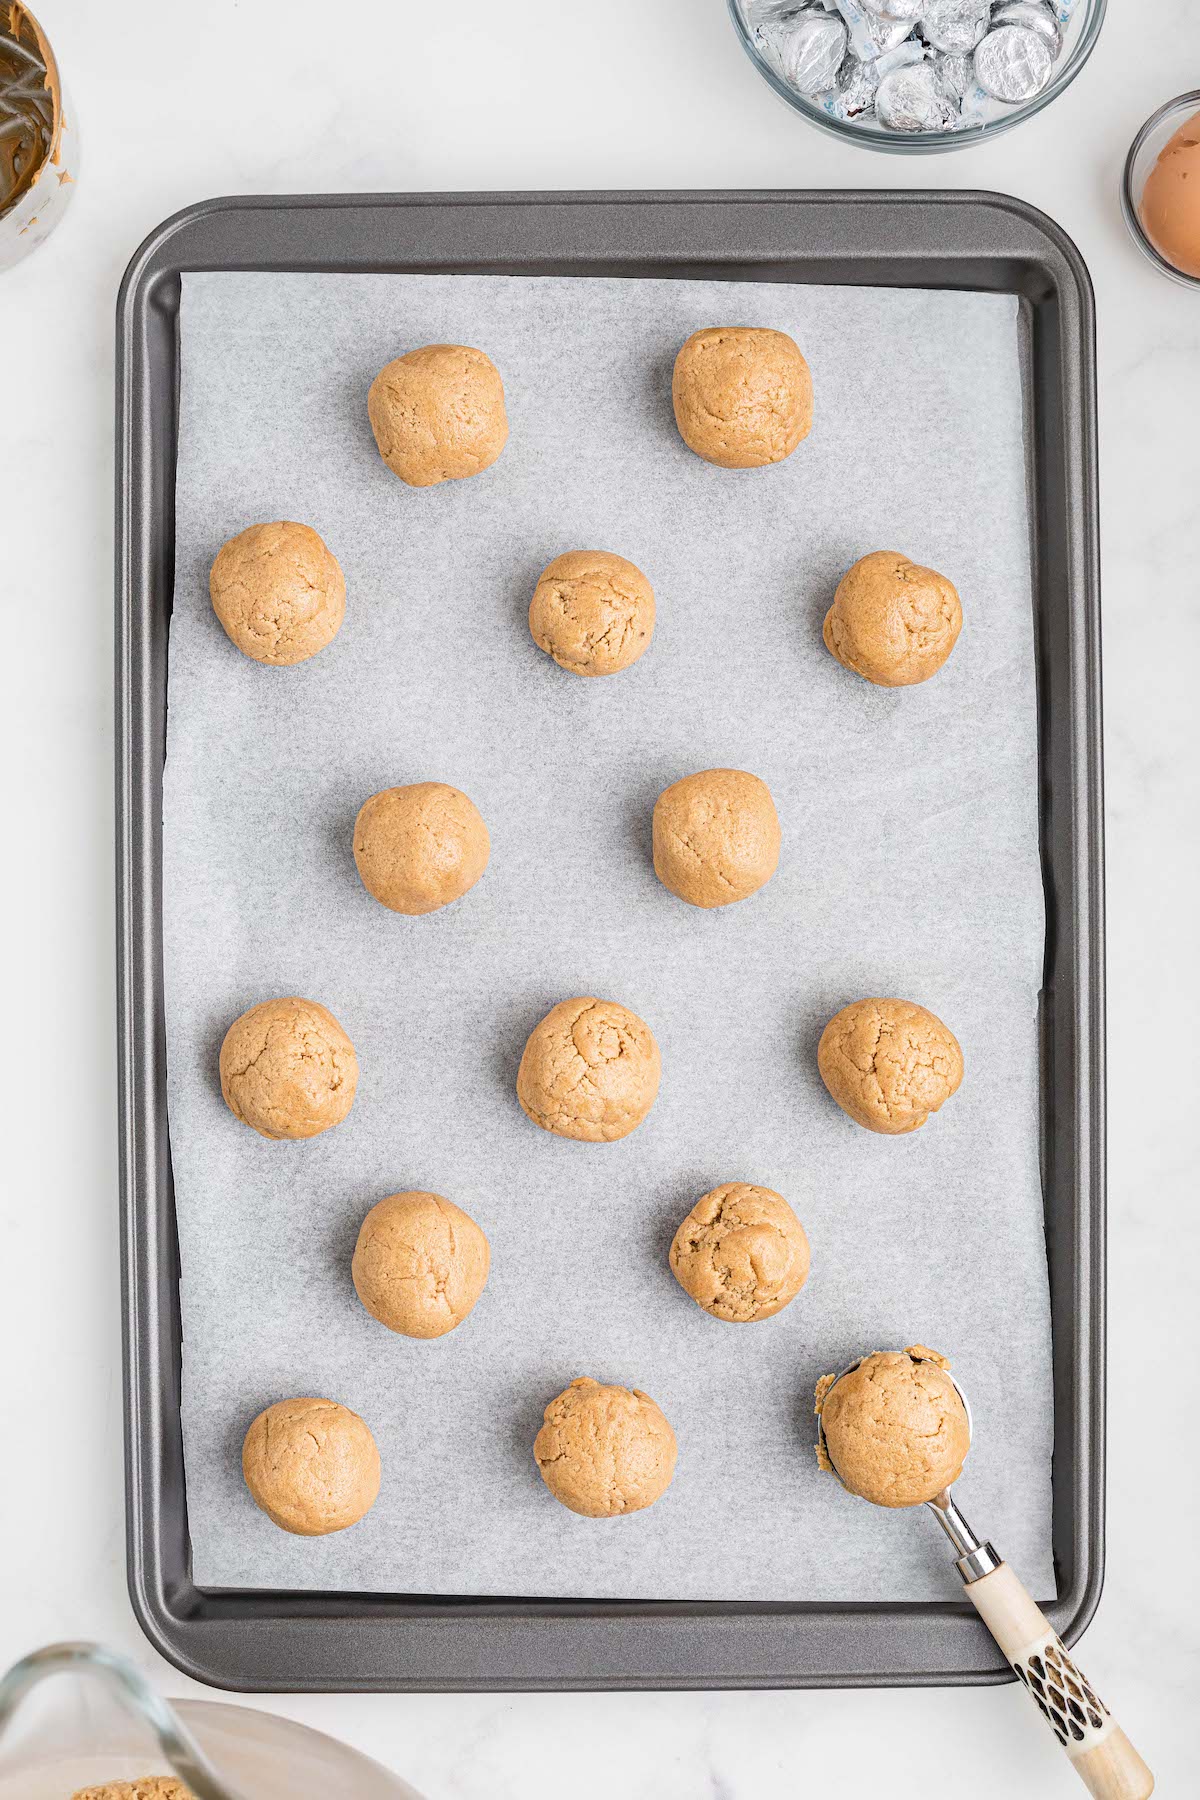 Peanut butter dough balls being placed on a cookie sheet